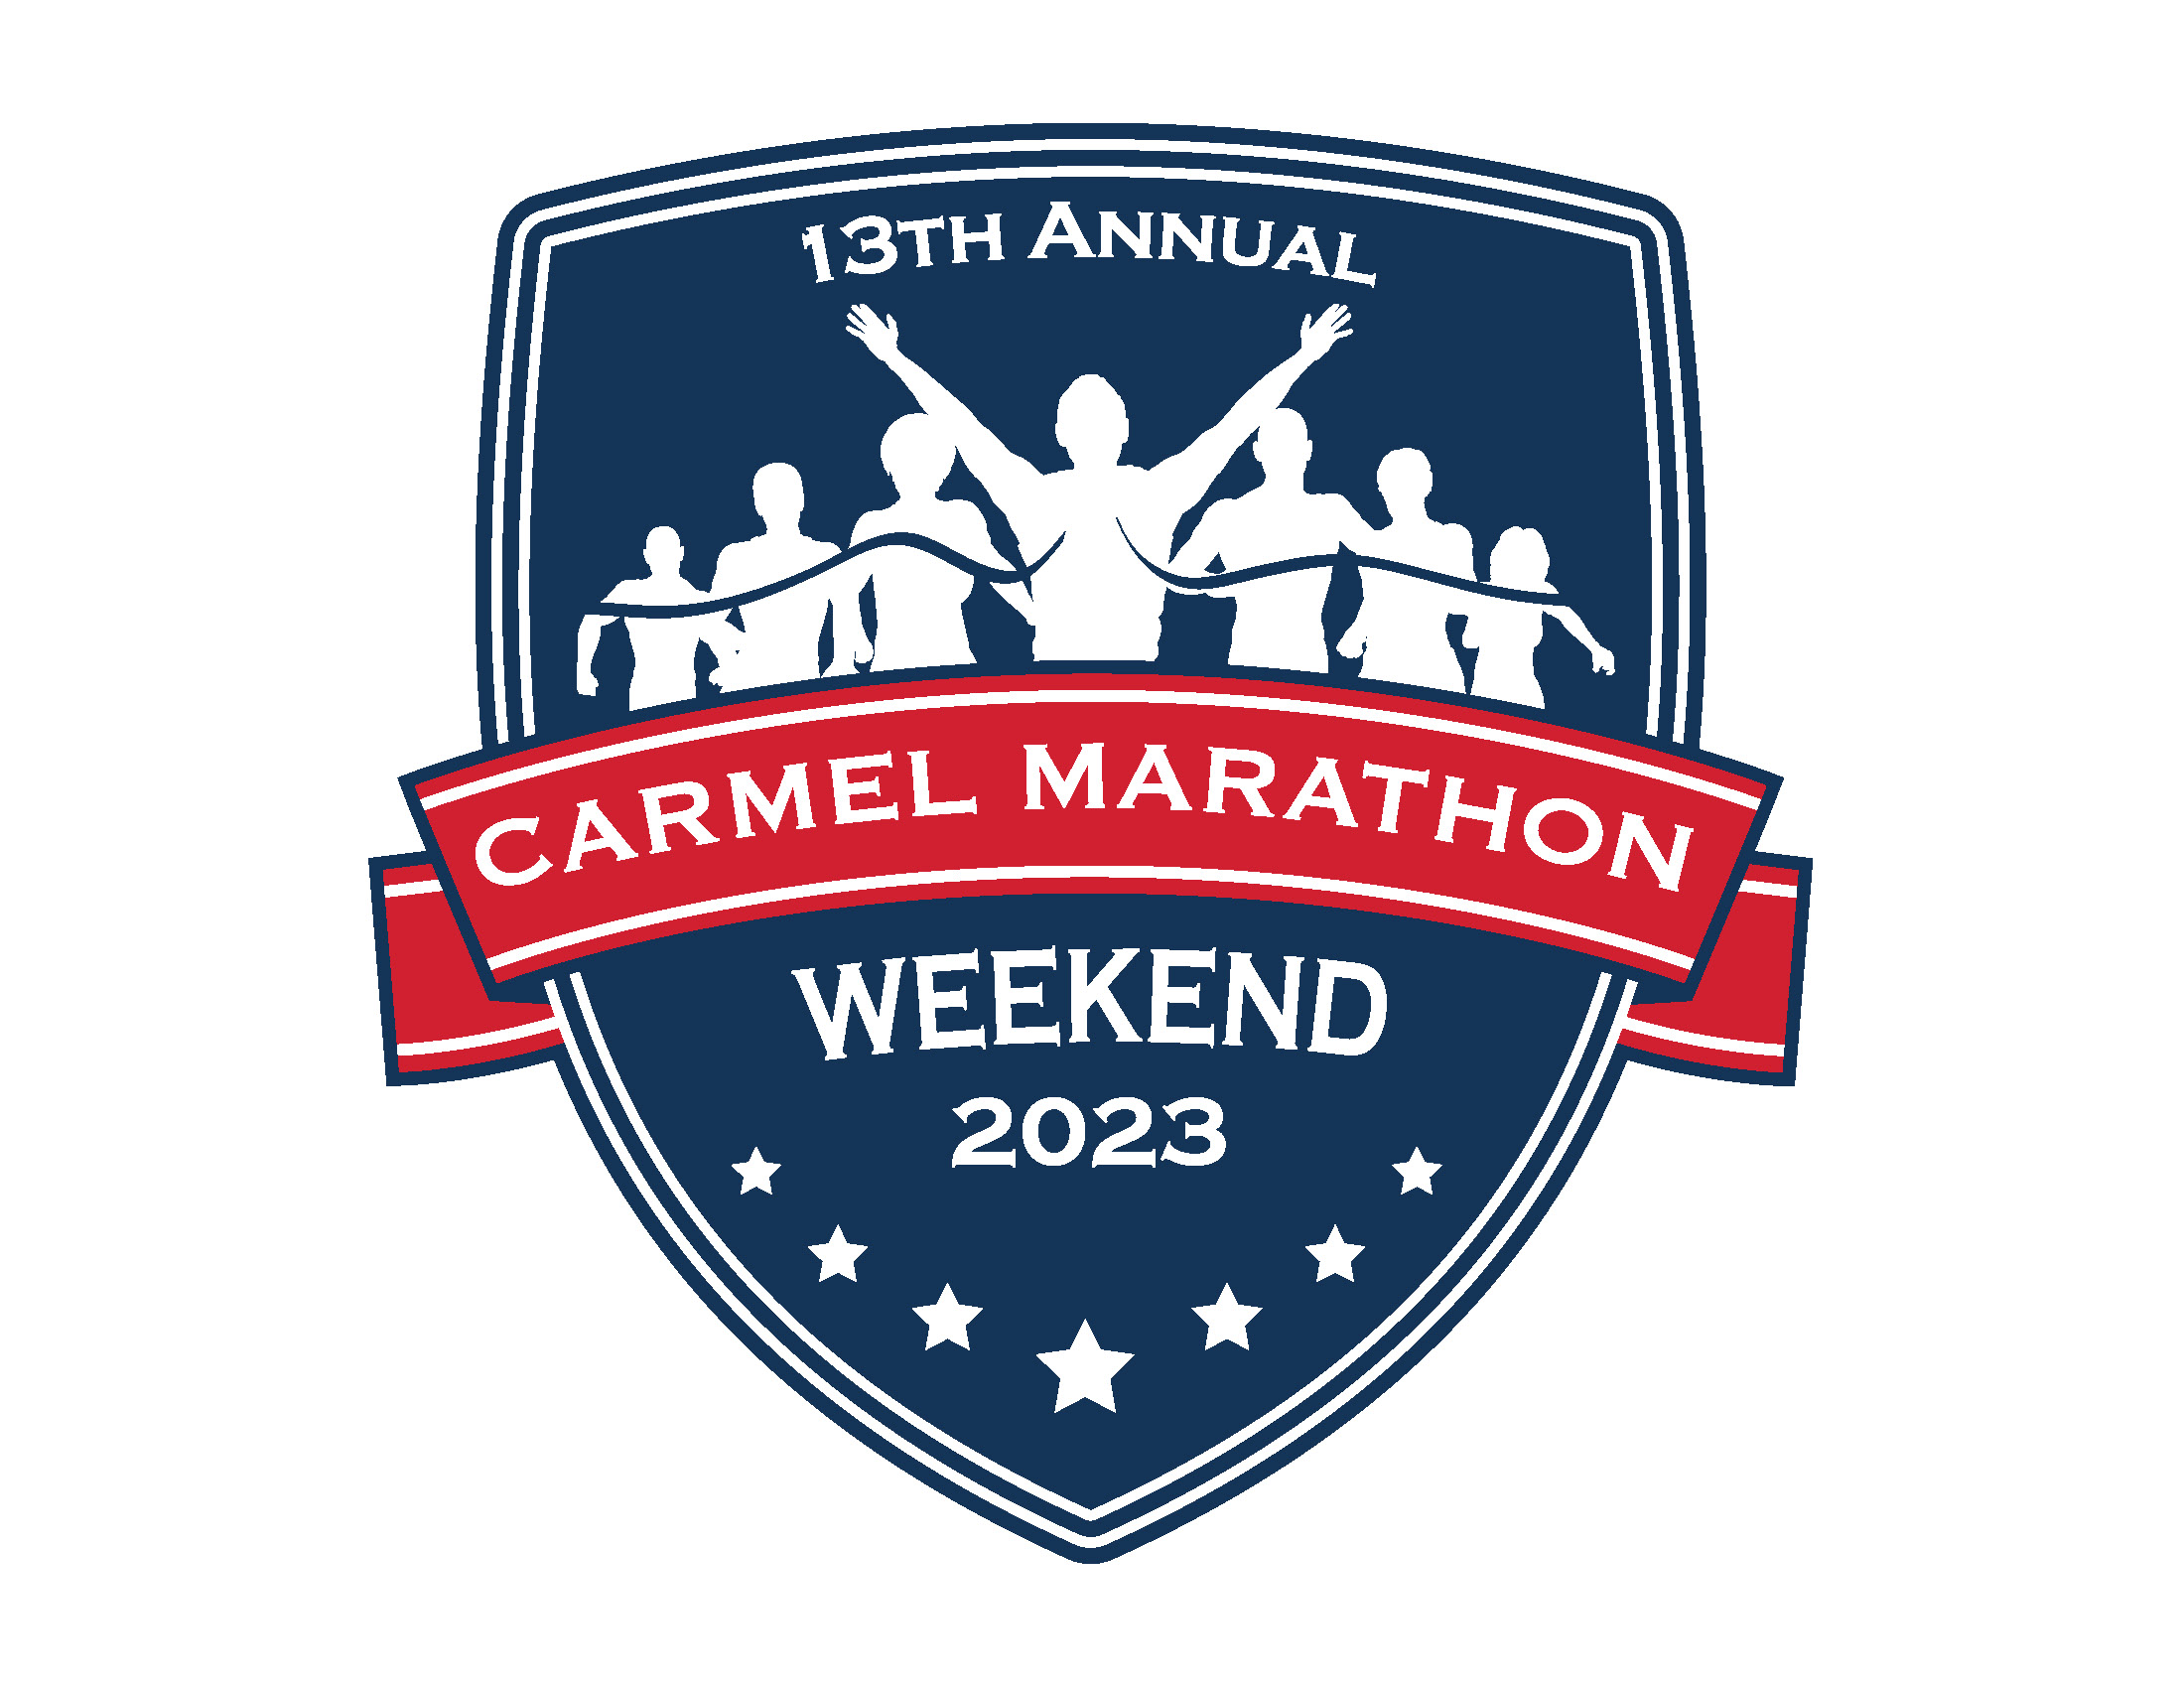 Carmel Marathon Weekend logo on RaceRaves